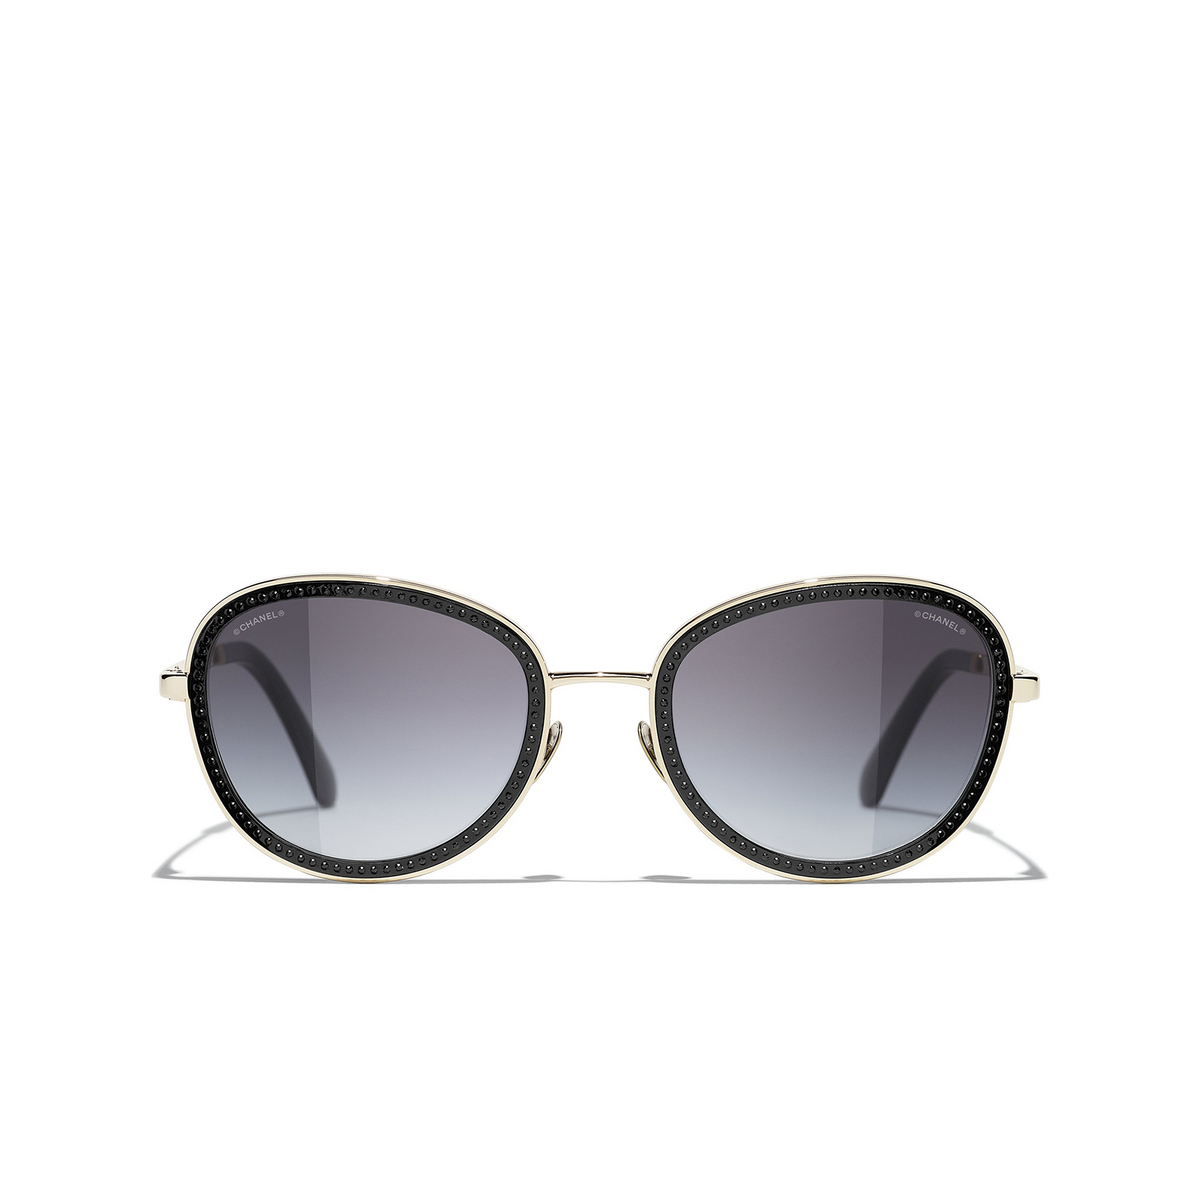 CHANEL pantos Sunglasses C395S6 Gold - front view